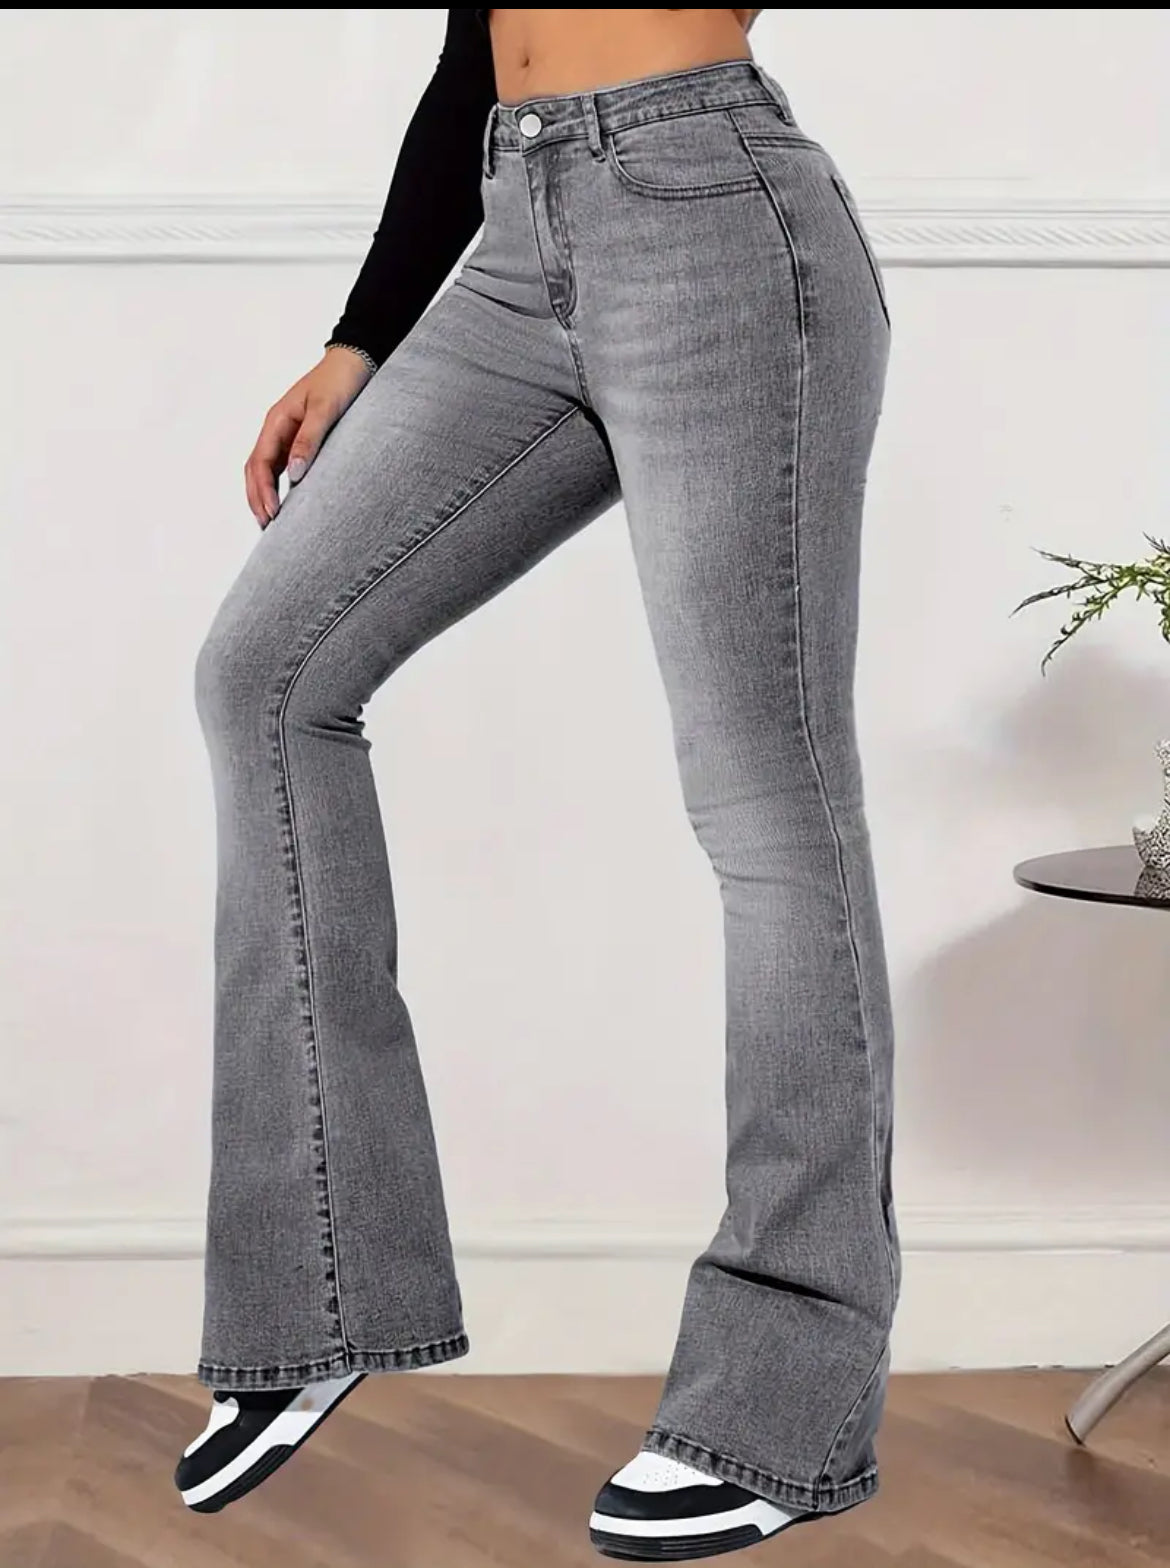 Grunge, High Waist Stretchy Jeans, Comfortable Slant Pocket Slimming, Retro Denim Pants, Girl Teens & Posh 💋 Mommies Collection